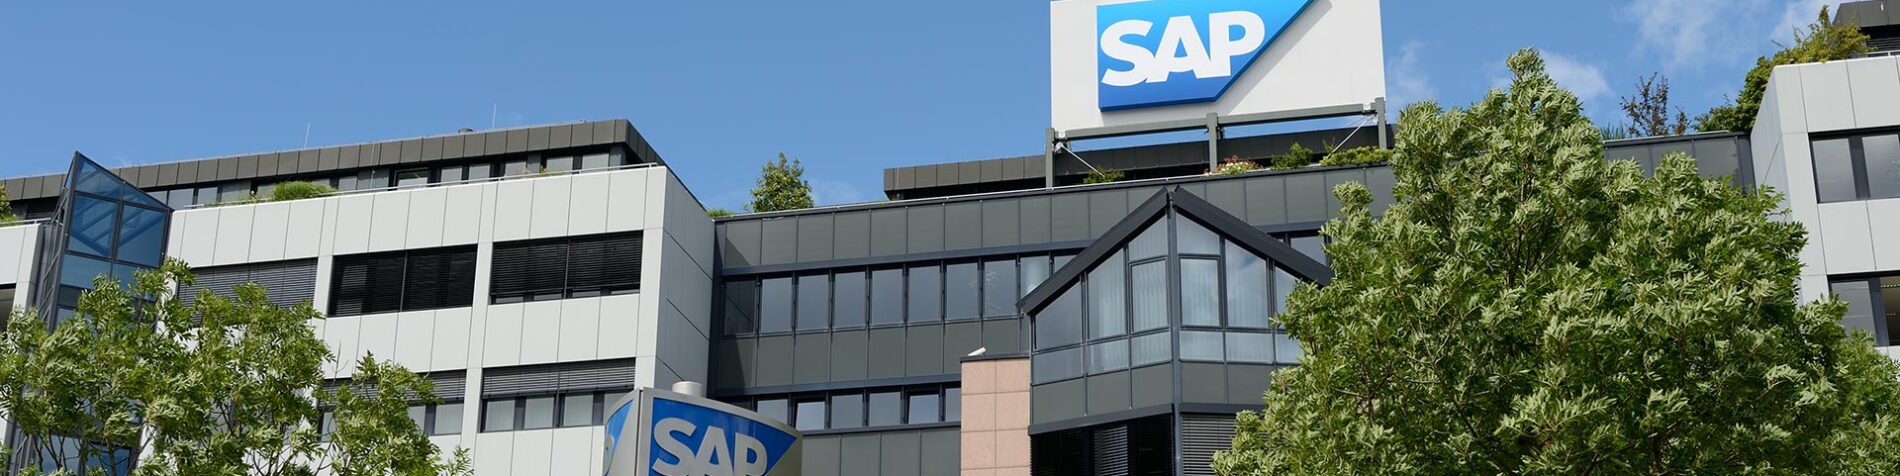 SAP Pre-Announces Outstanding Third Quarter Results